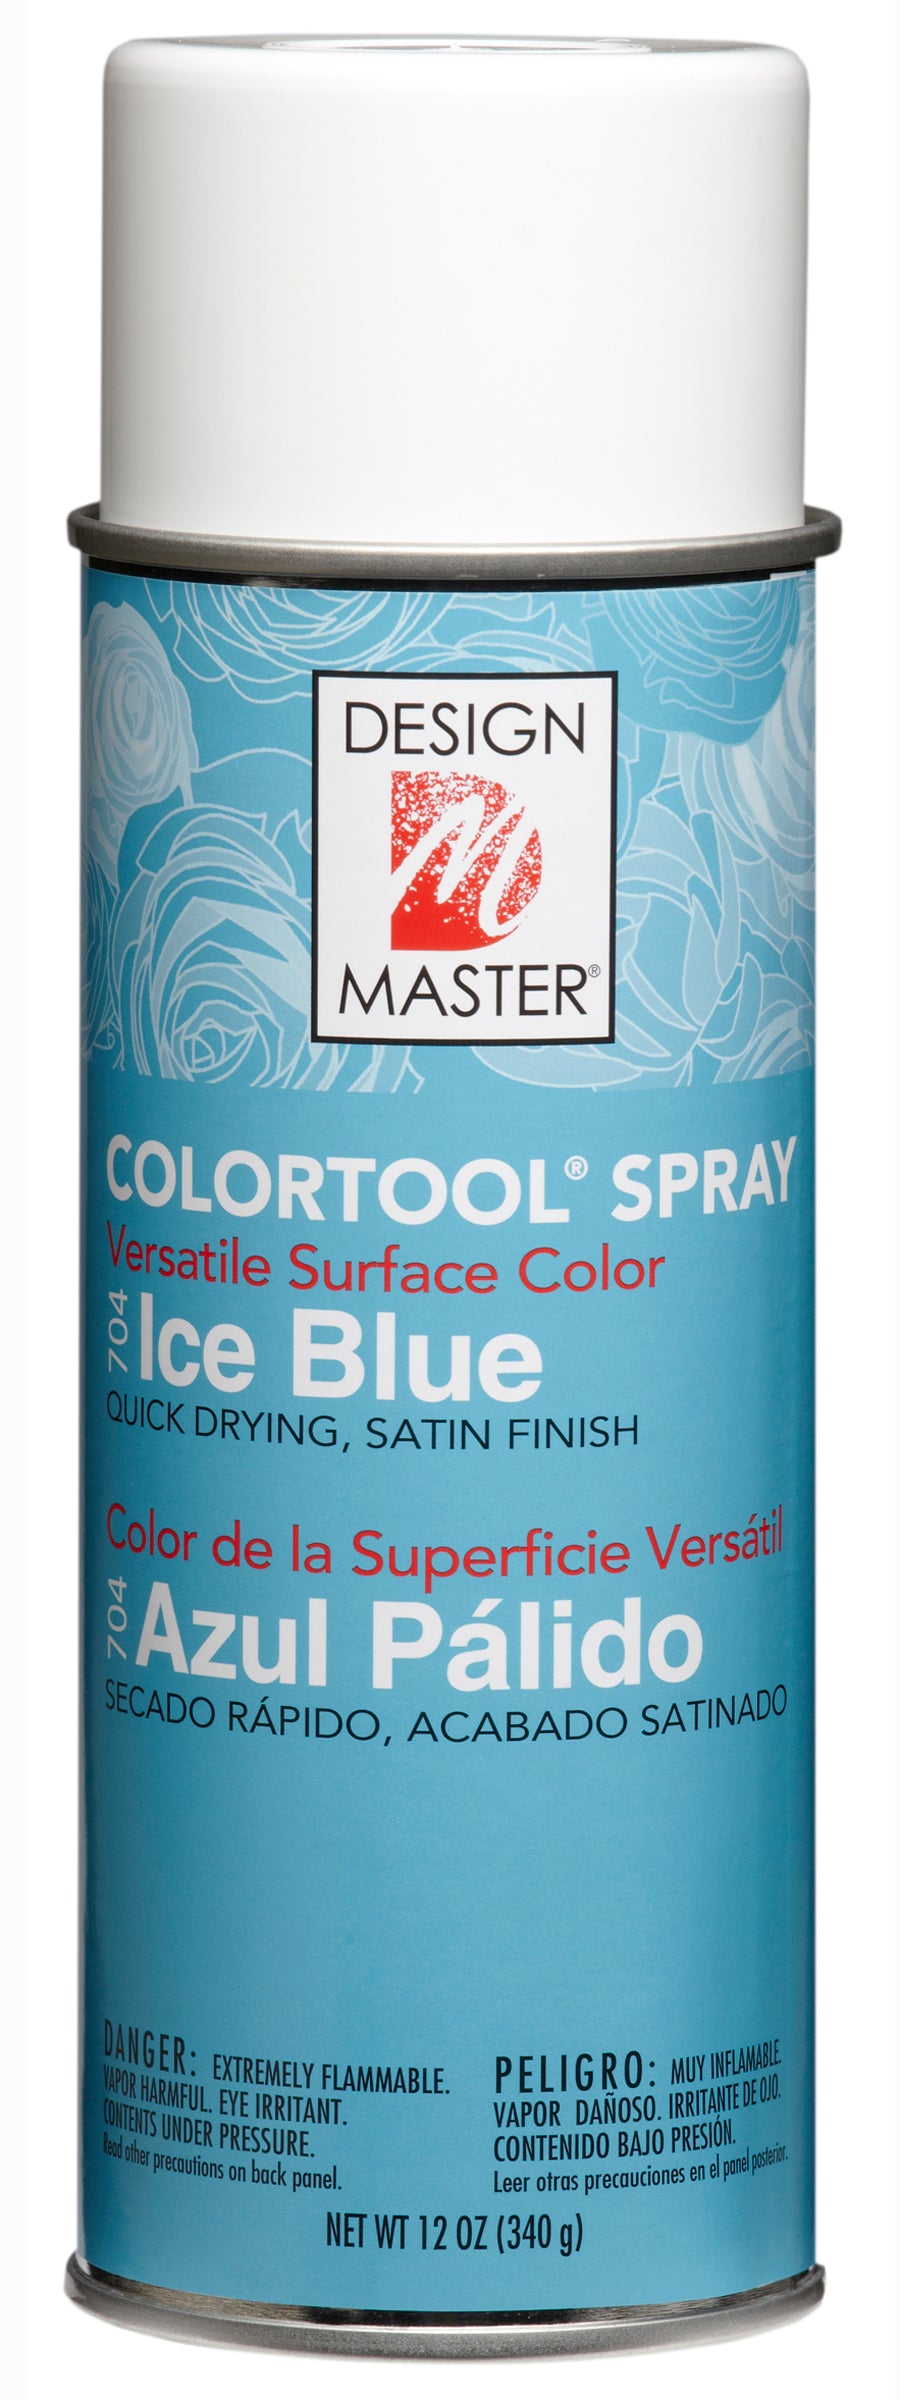 Design Master Colortool Spray-Ice Blue